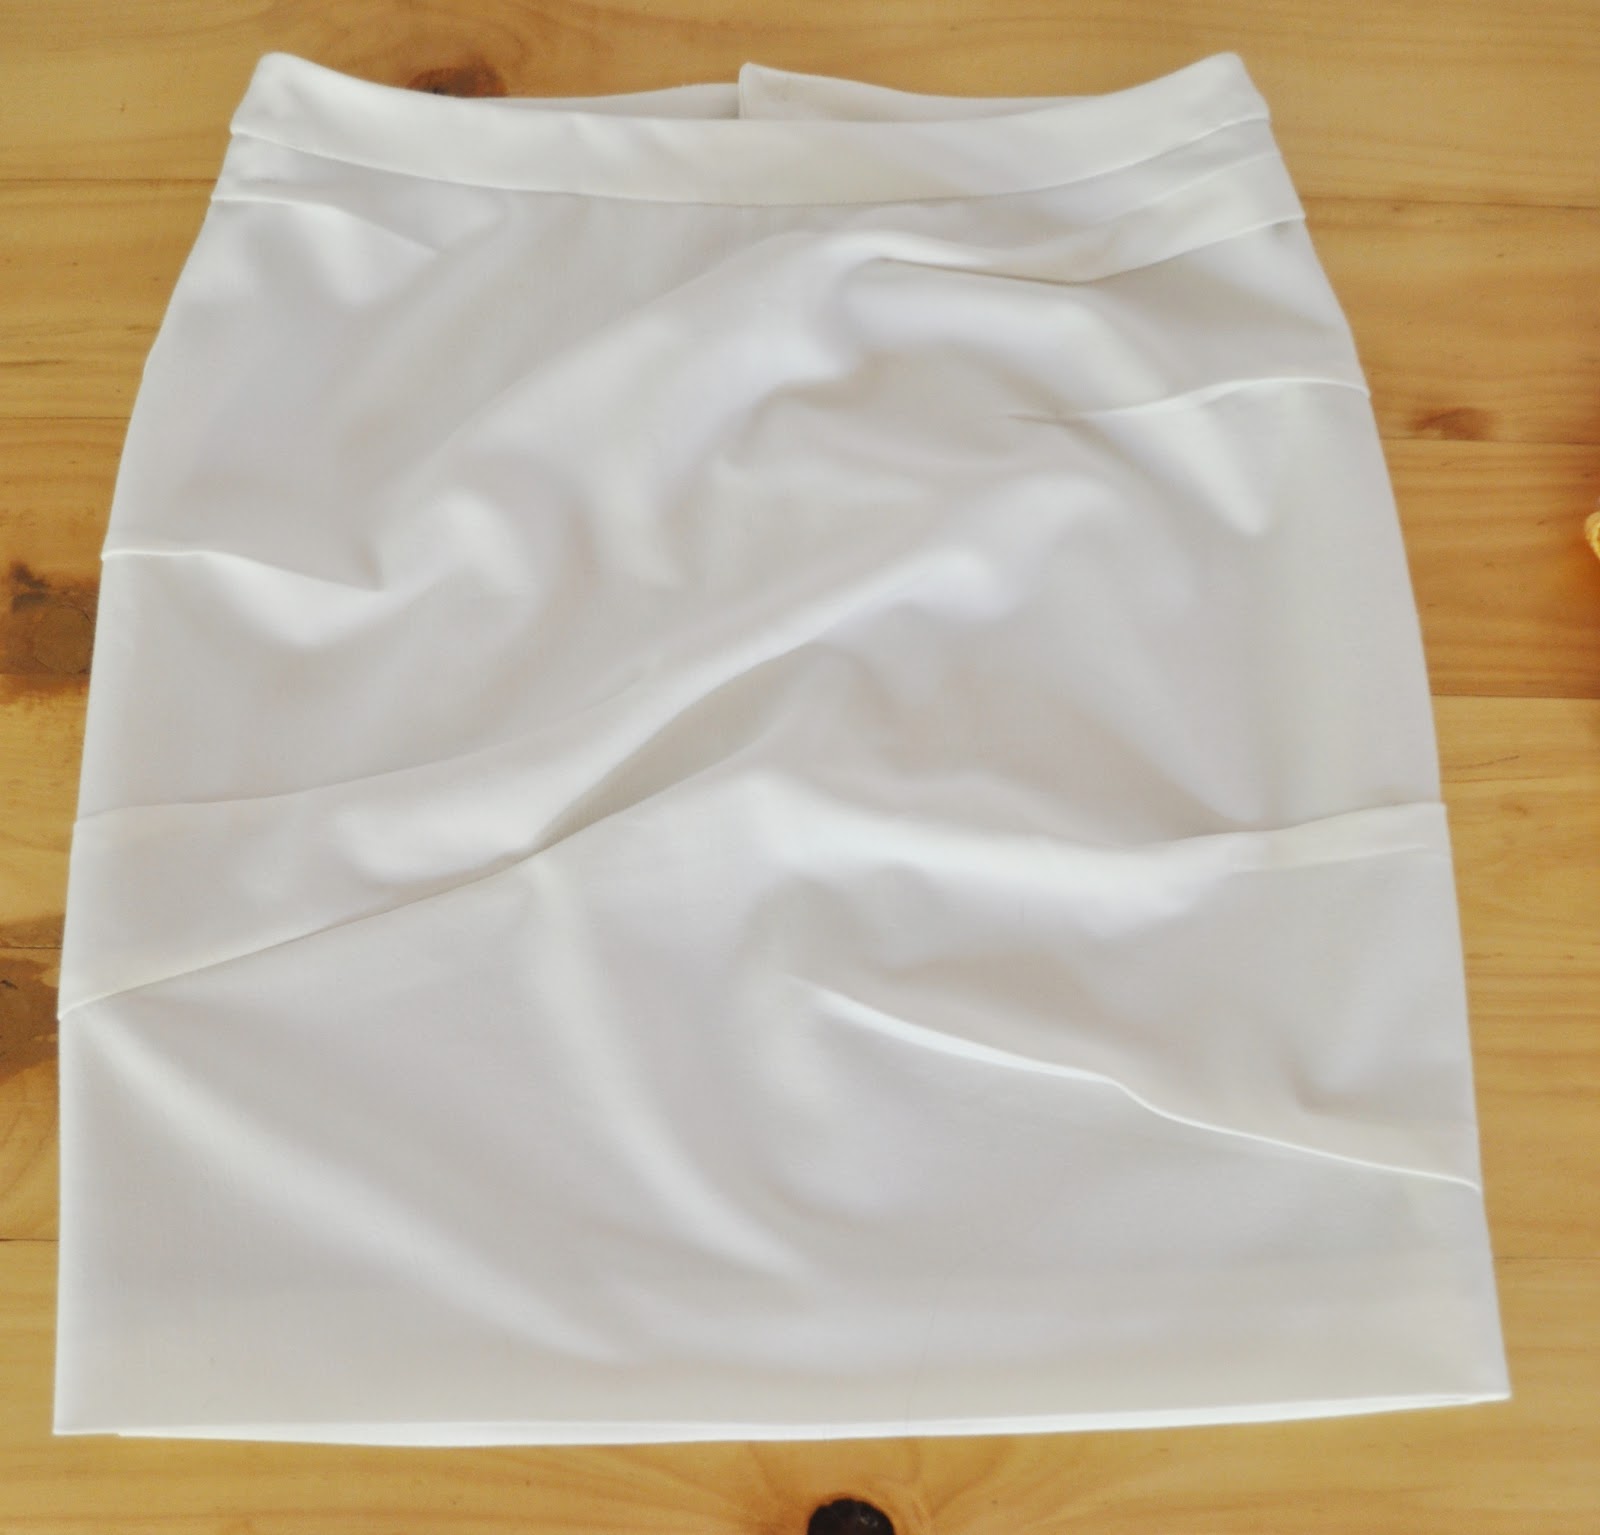 Bloom's Endless Summer: Patrones skirt with tucks